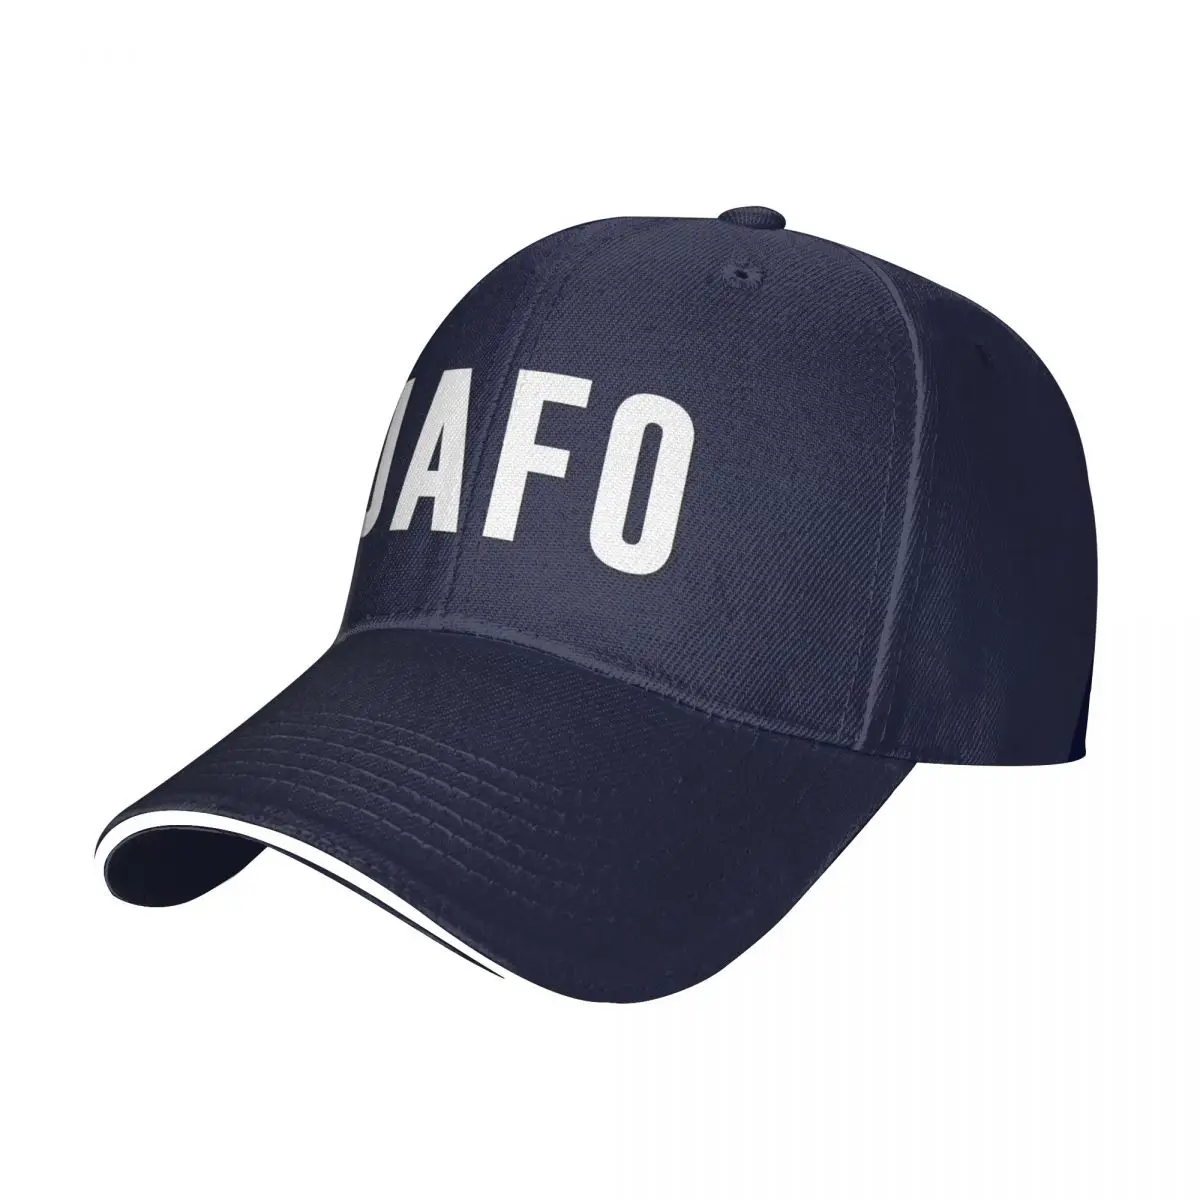 Новая кепка JAFO - Just Another Blue Thunder Observer, бейсбольная кепка, зимняя шапка для регби, женская зимняя шапка, мужская